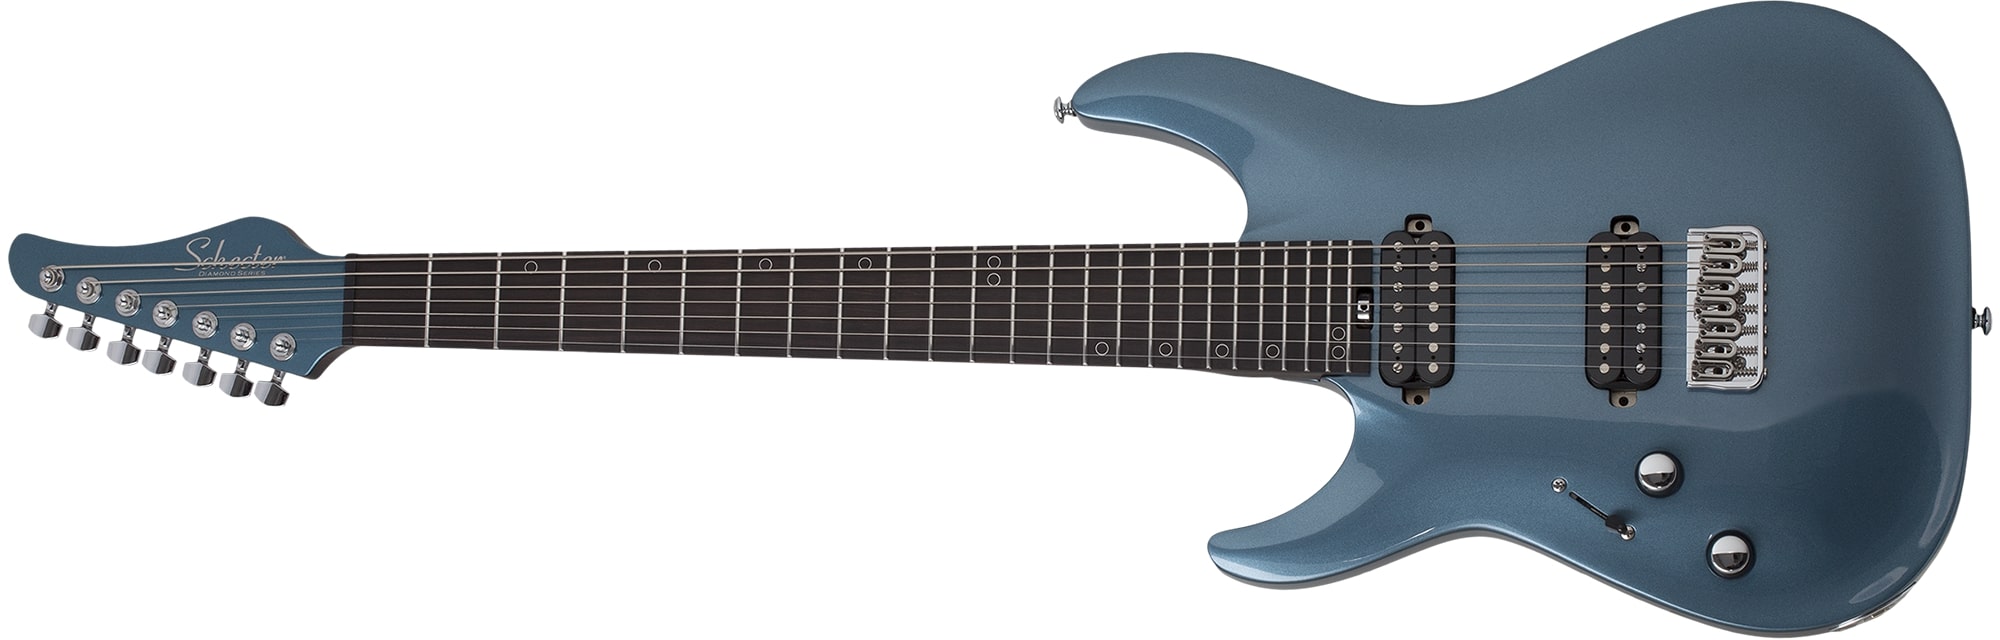 Schecter Aaron Marshall AM-7 Left-Handed Electric Guitar, Cobalt Slate 2943-SHC